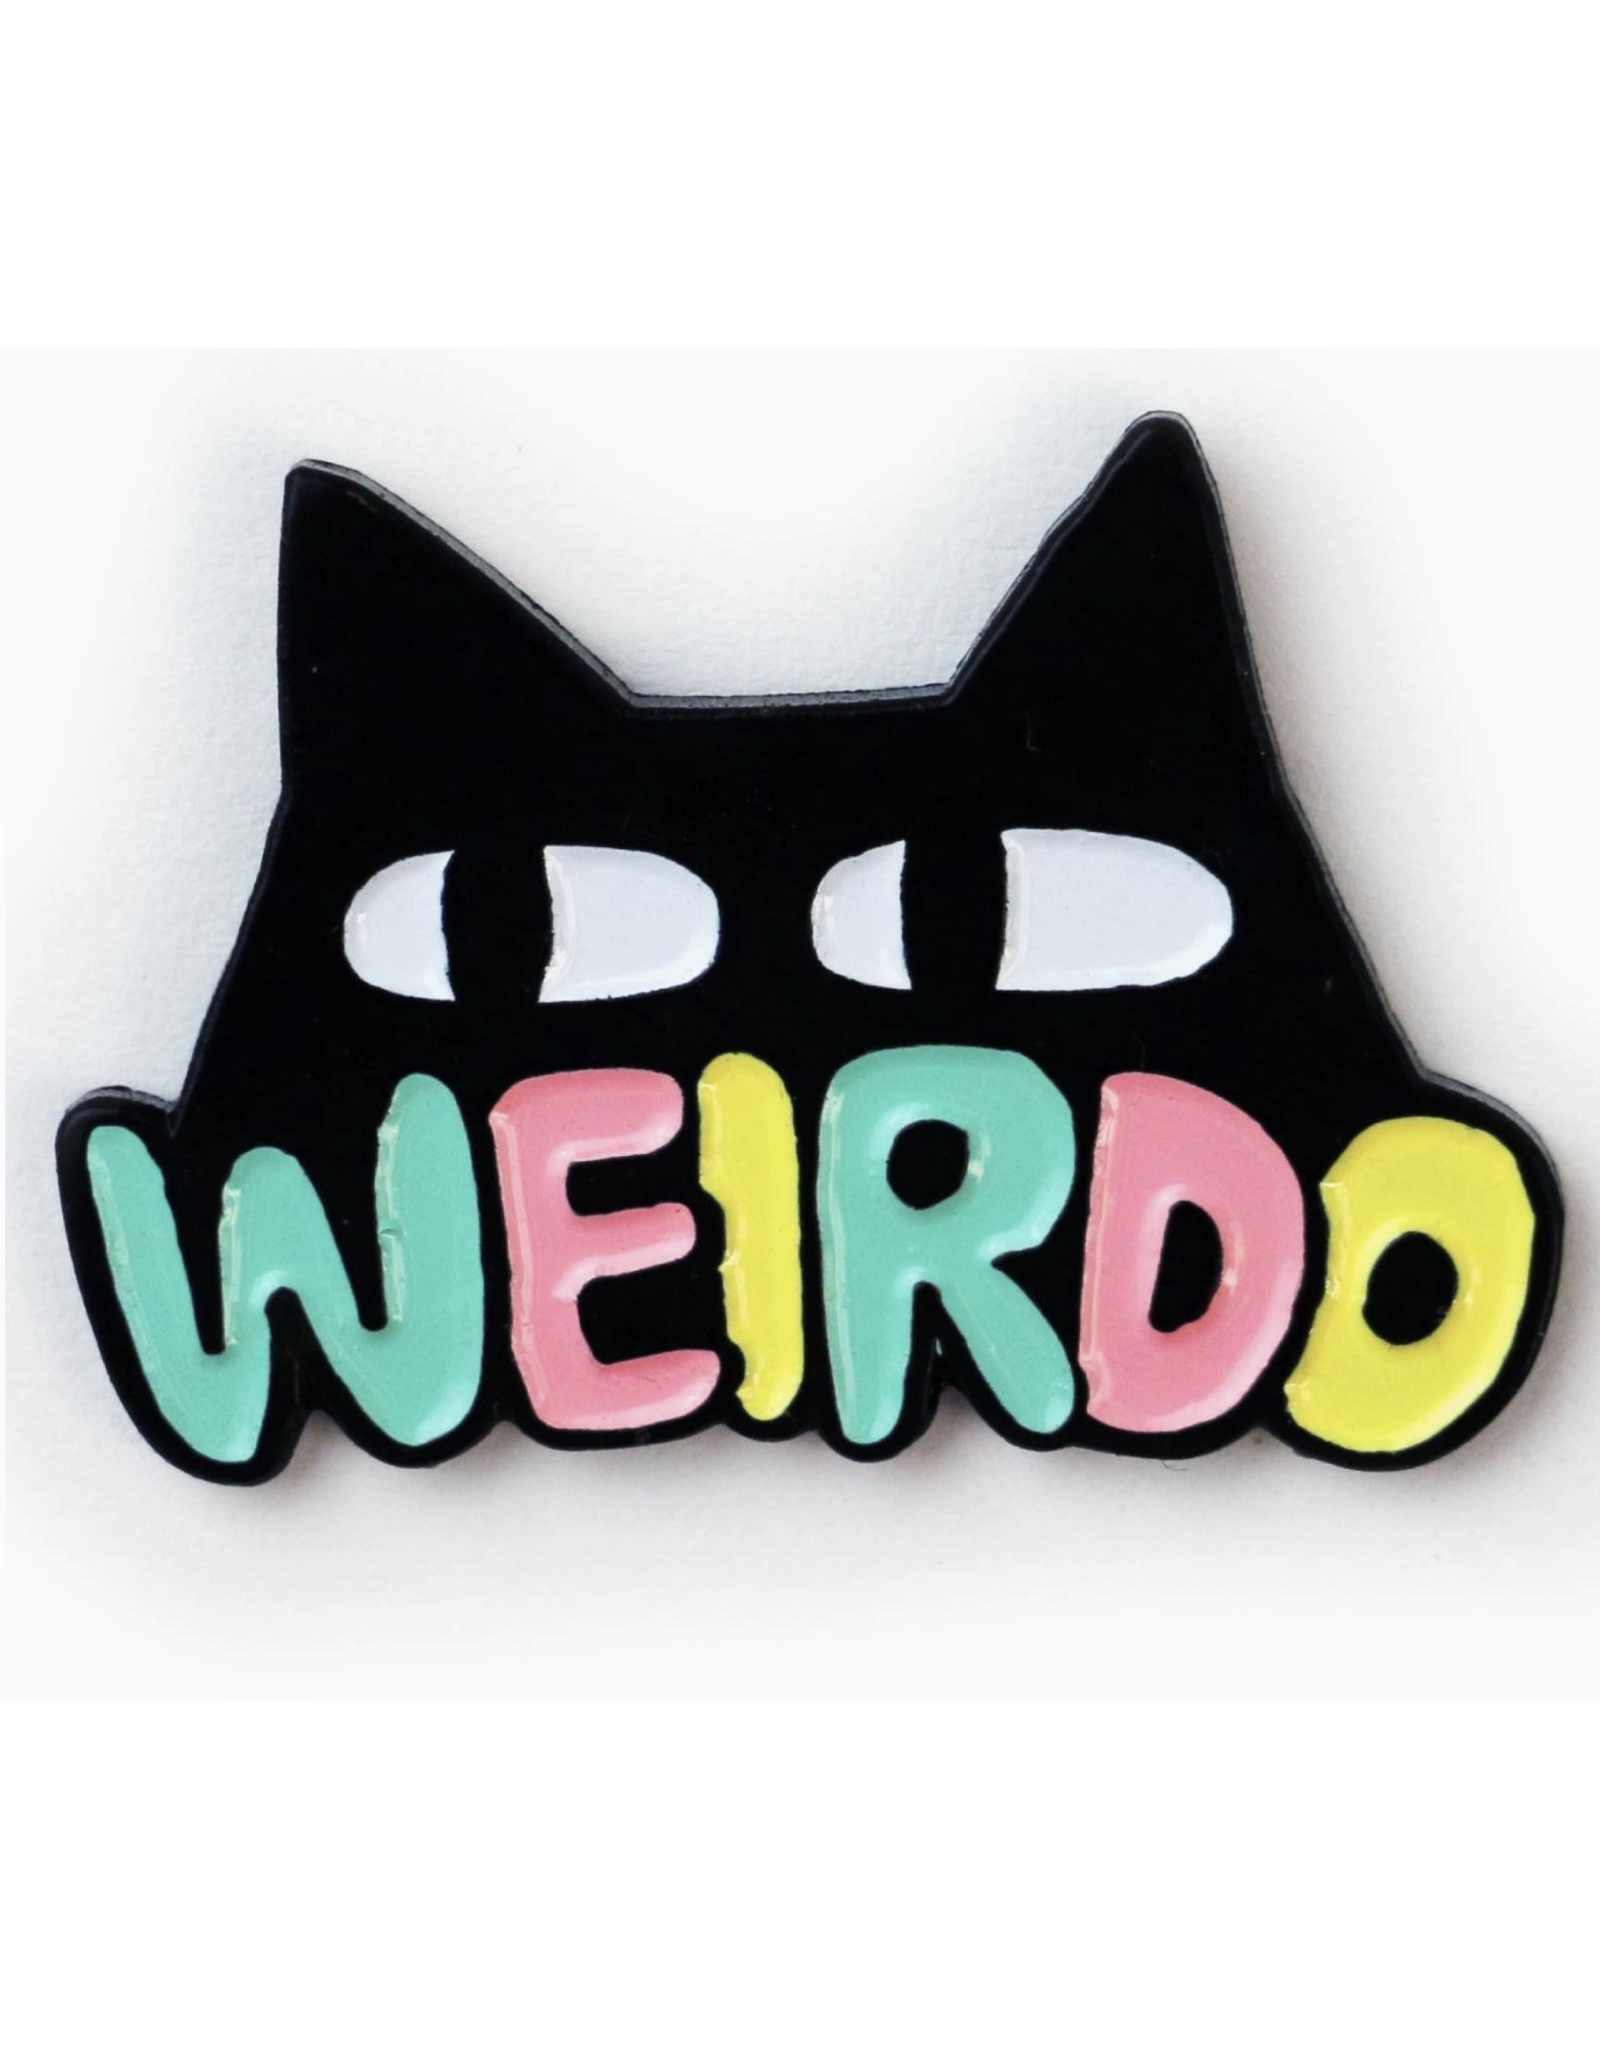 Weirdo Cat Pin